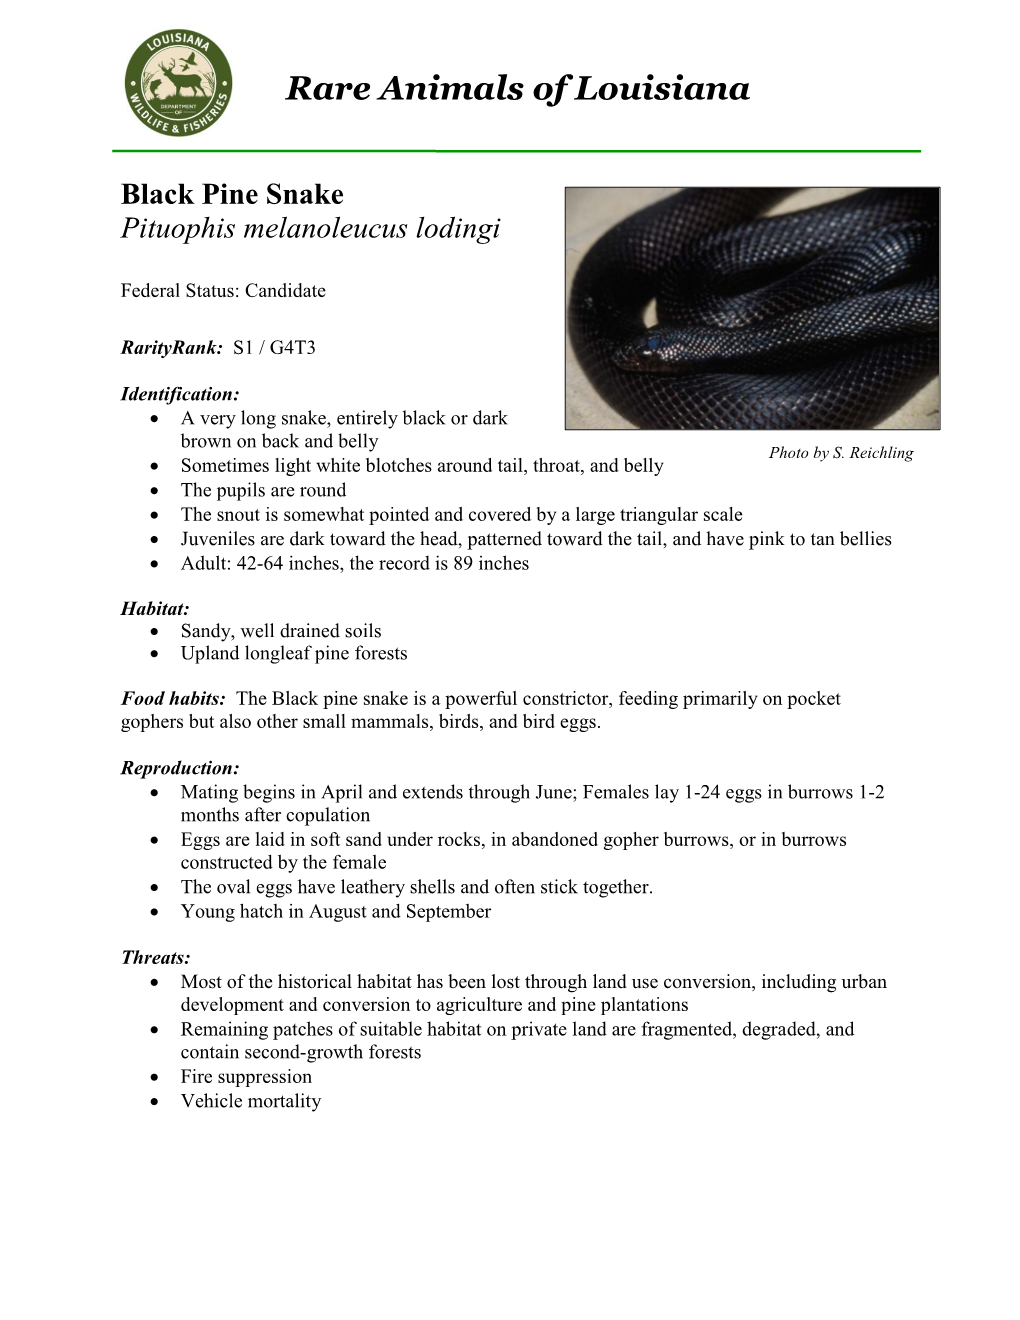 Black Pine Snake Pituophis Melanoleucus Lodingi